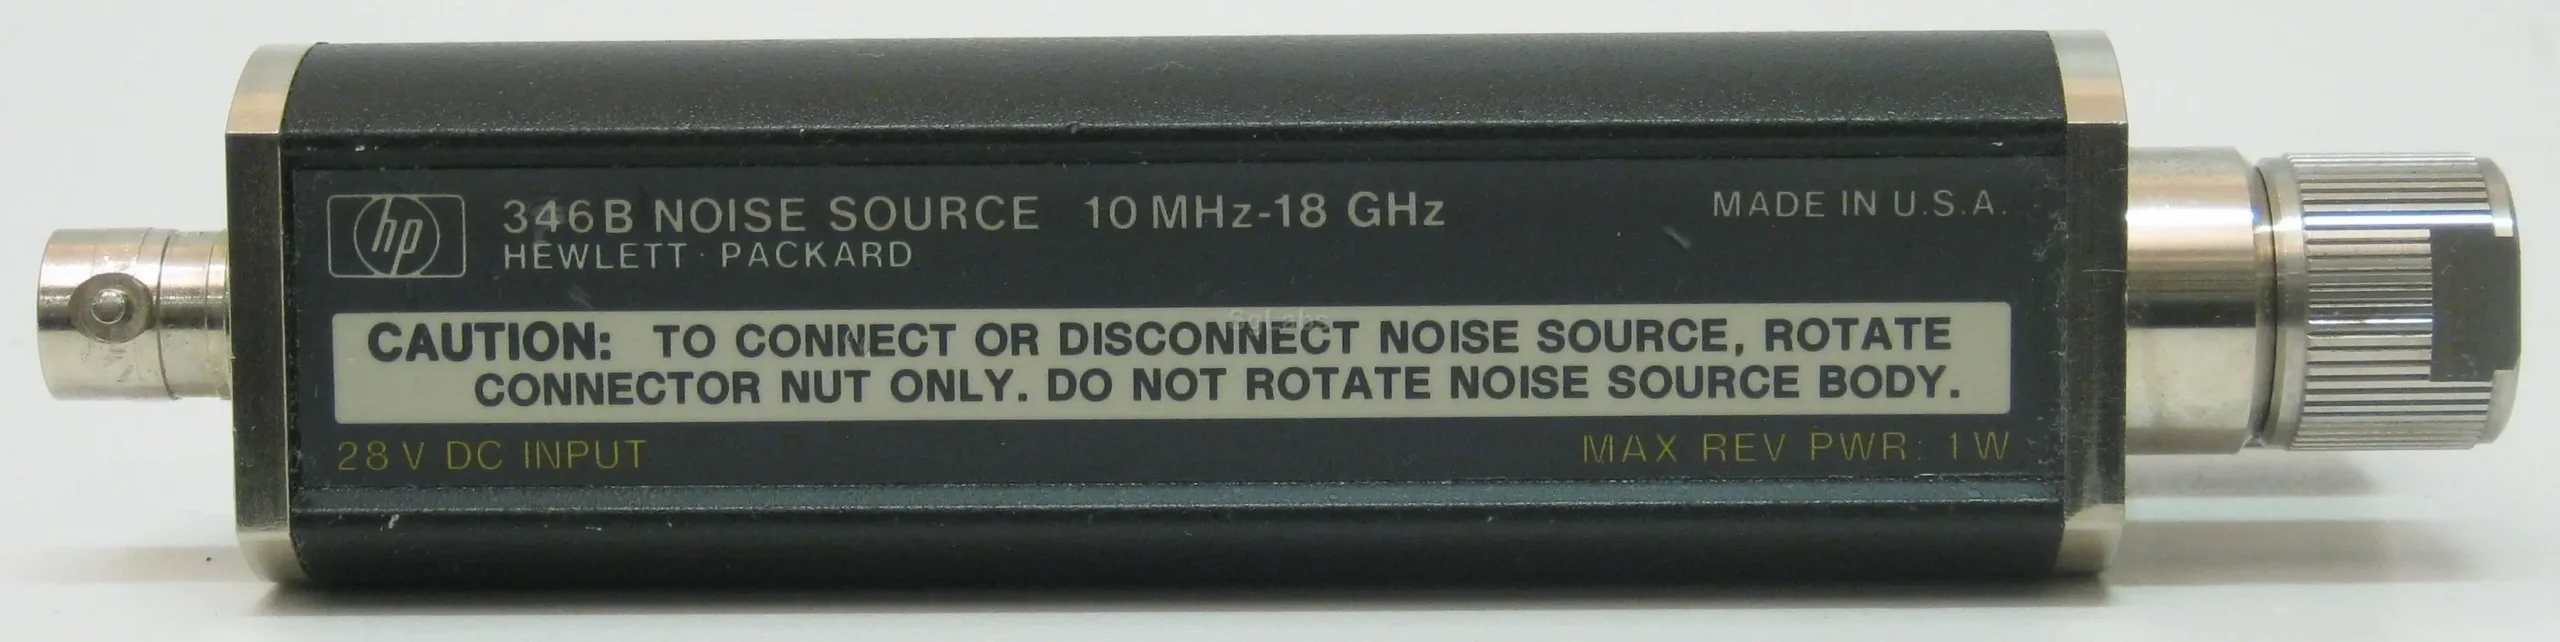 hewlett packard 346b - How do you measure noise figures